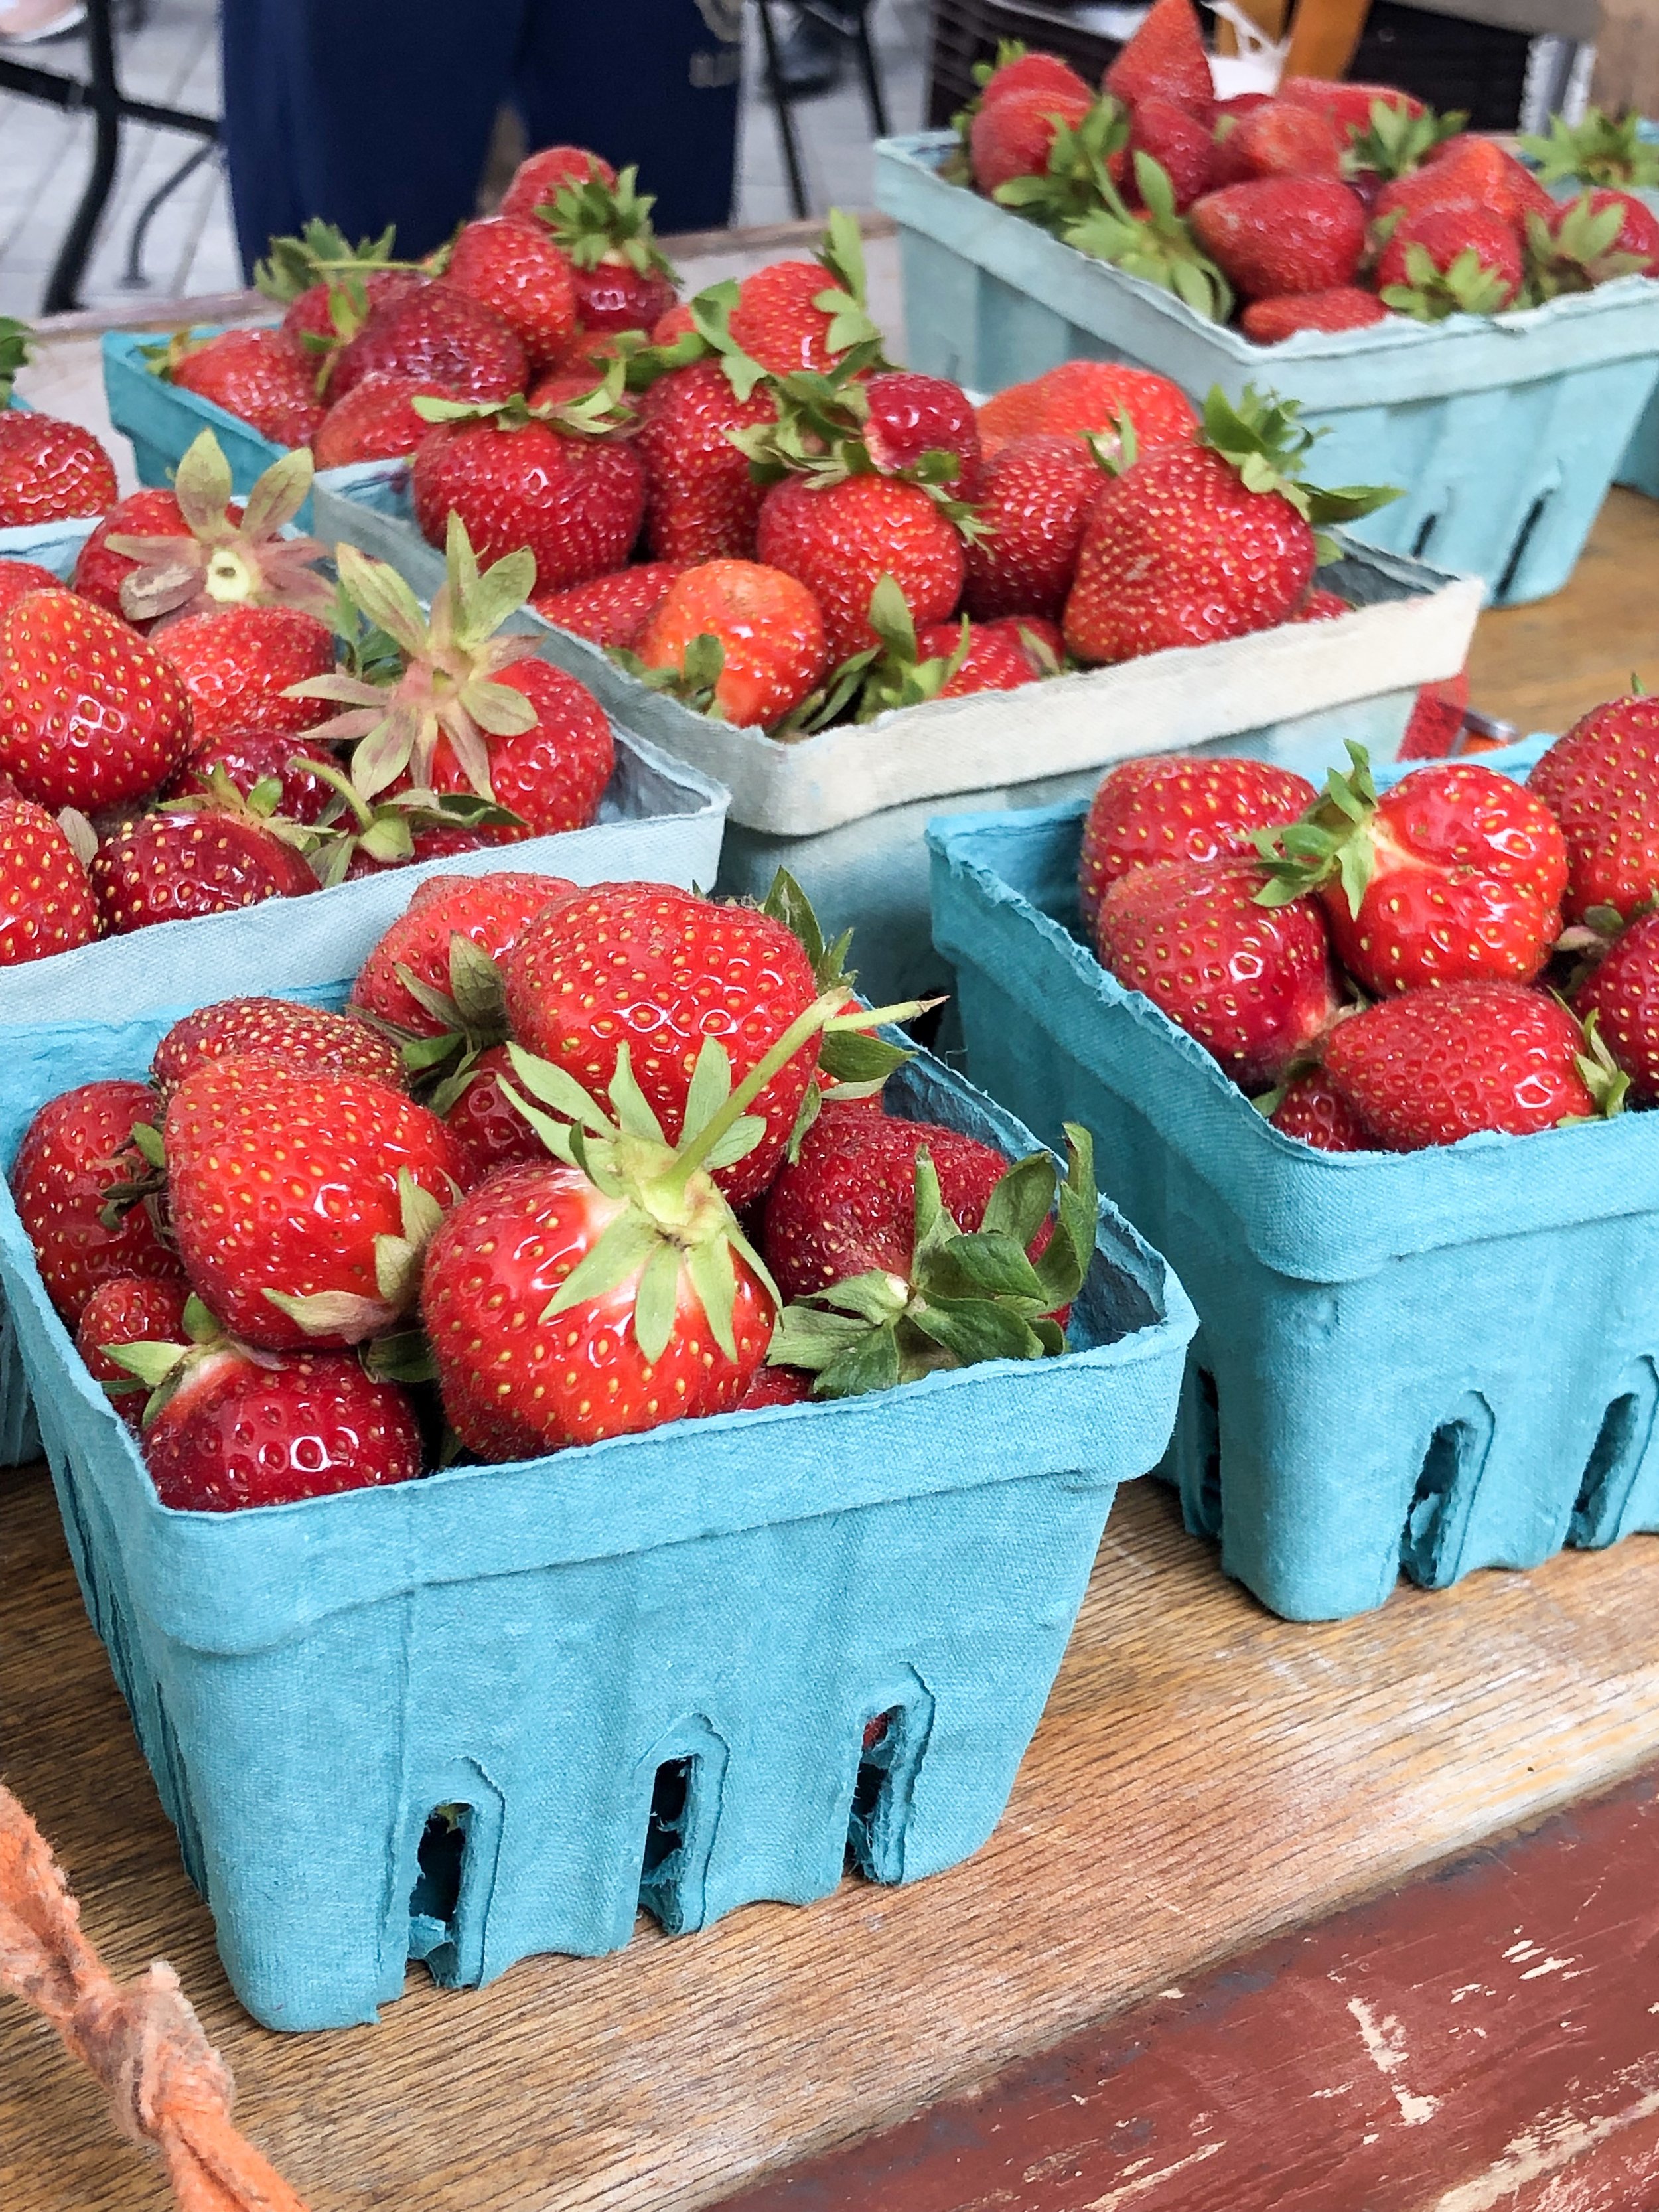 Farmers Market Strawberries 3.jpg